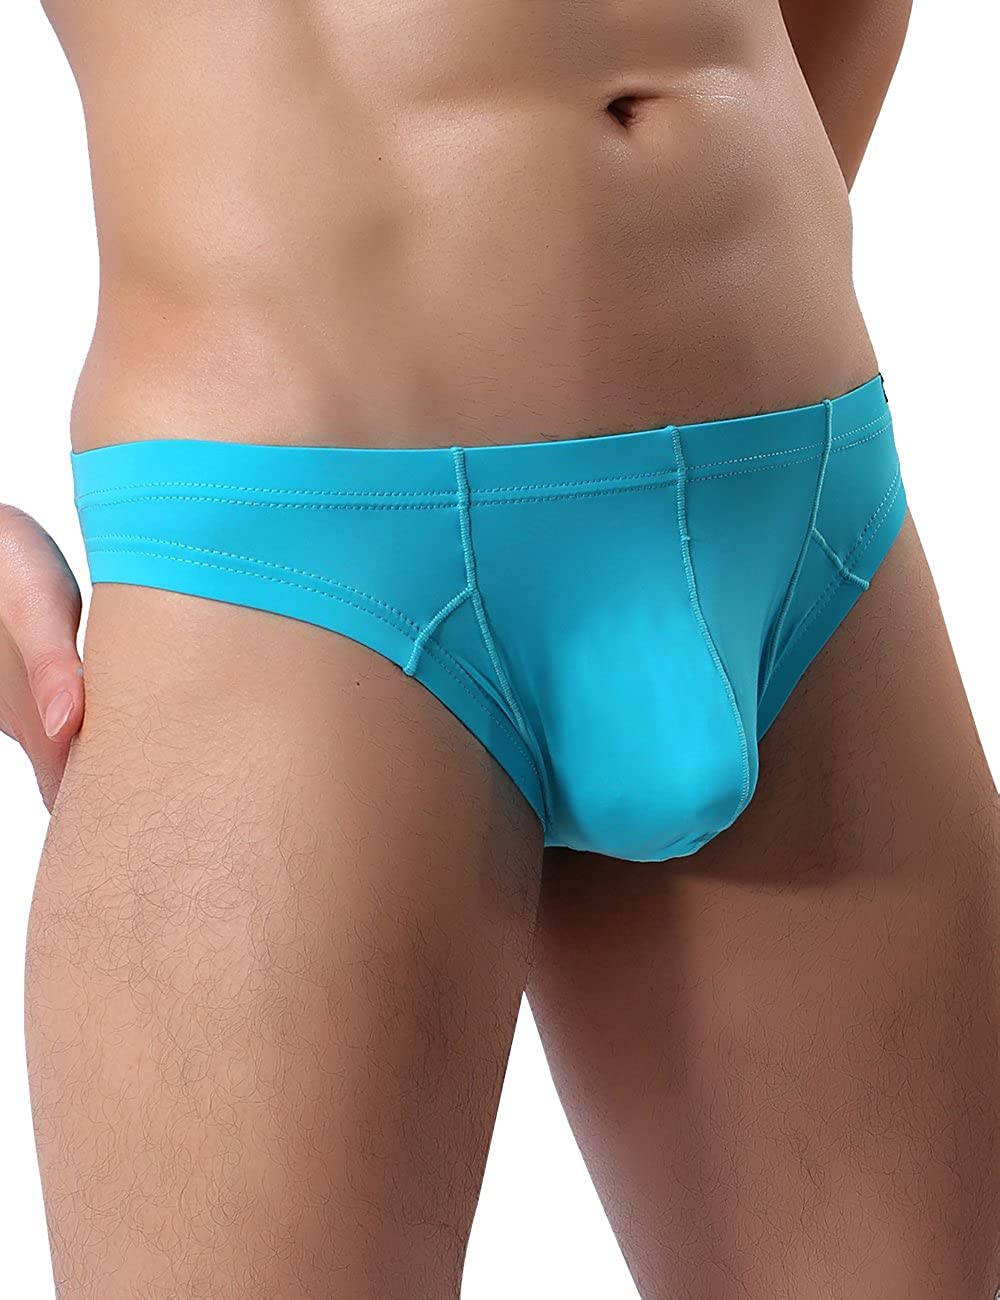 Ikingsky Men S Cheeky Briefs Sexy Low Ries Pouch Mens Underwear Ebay